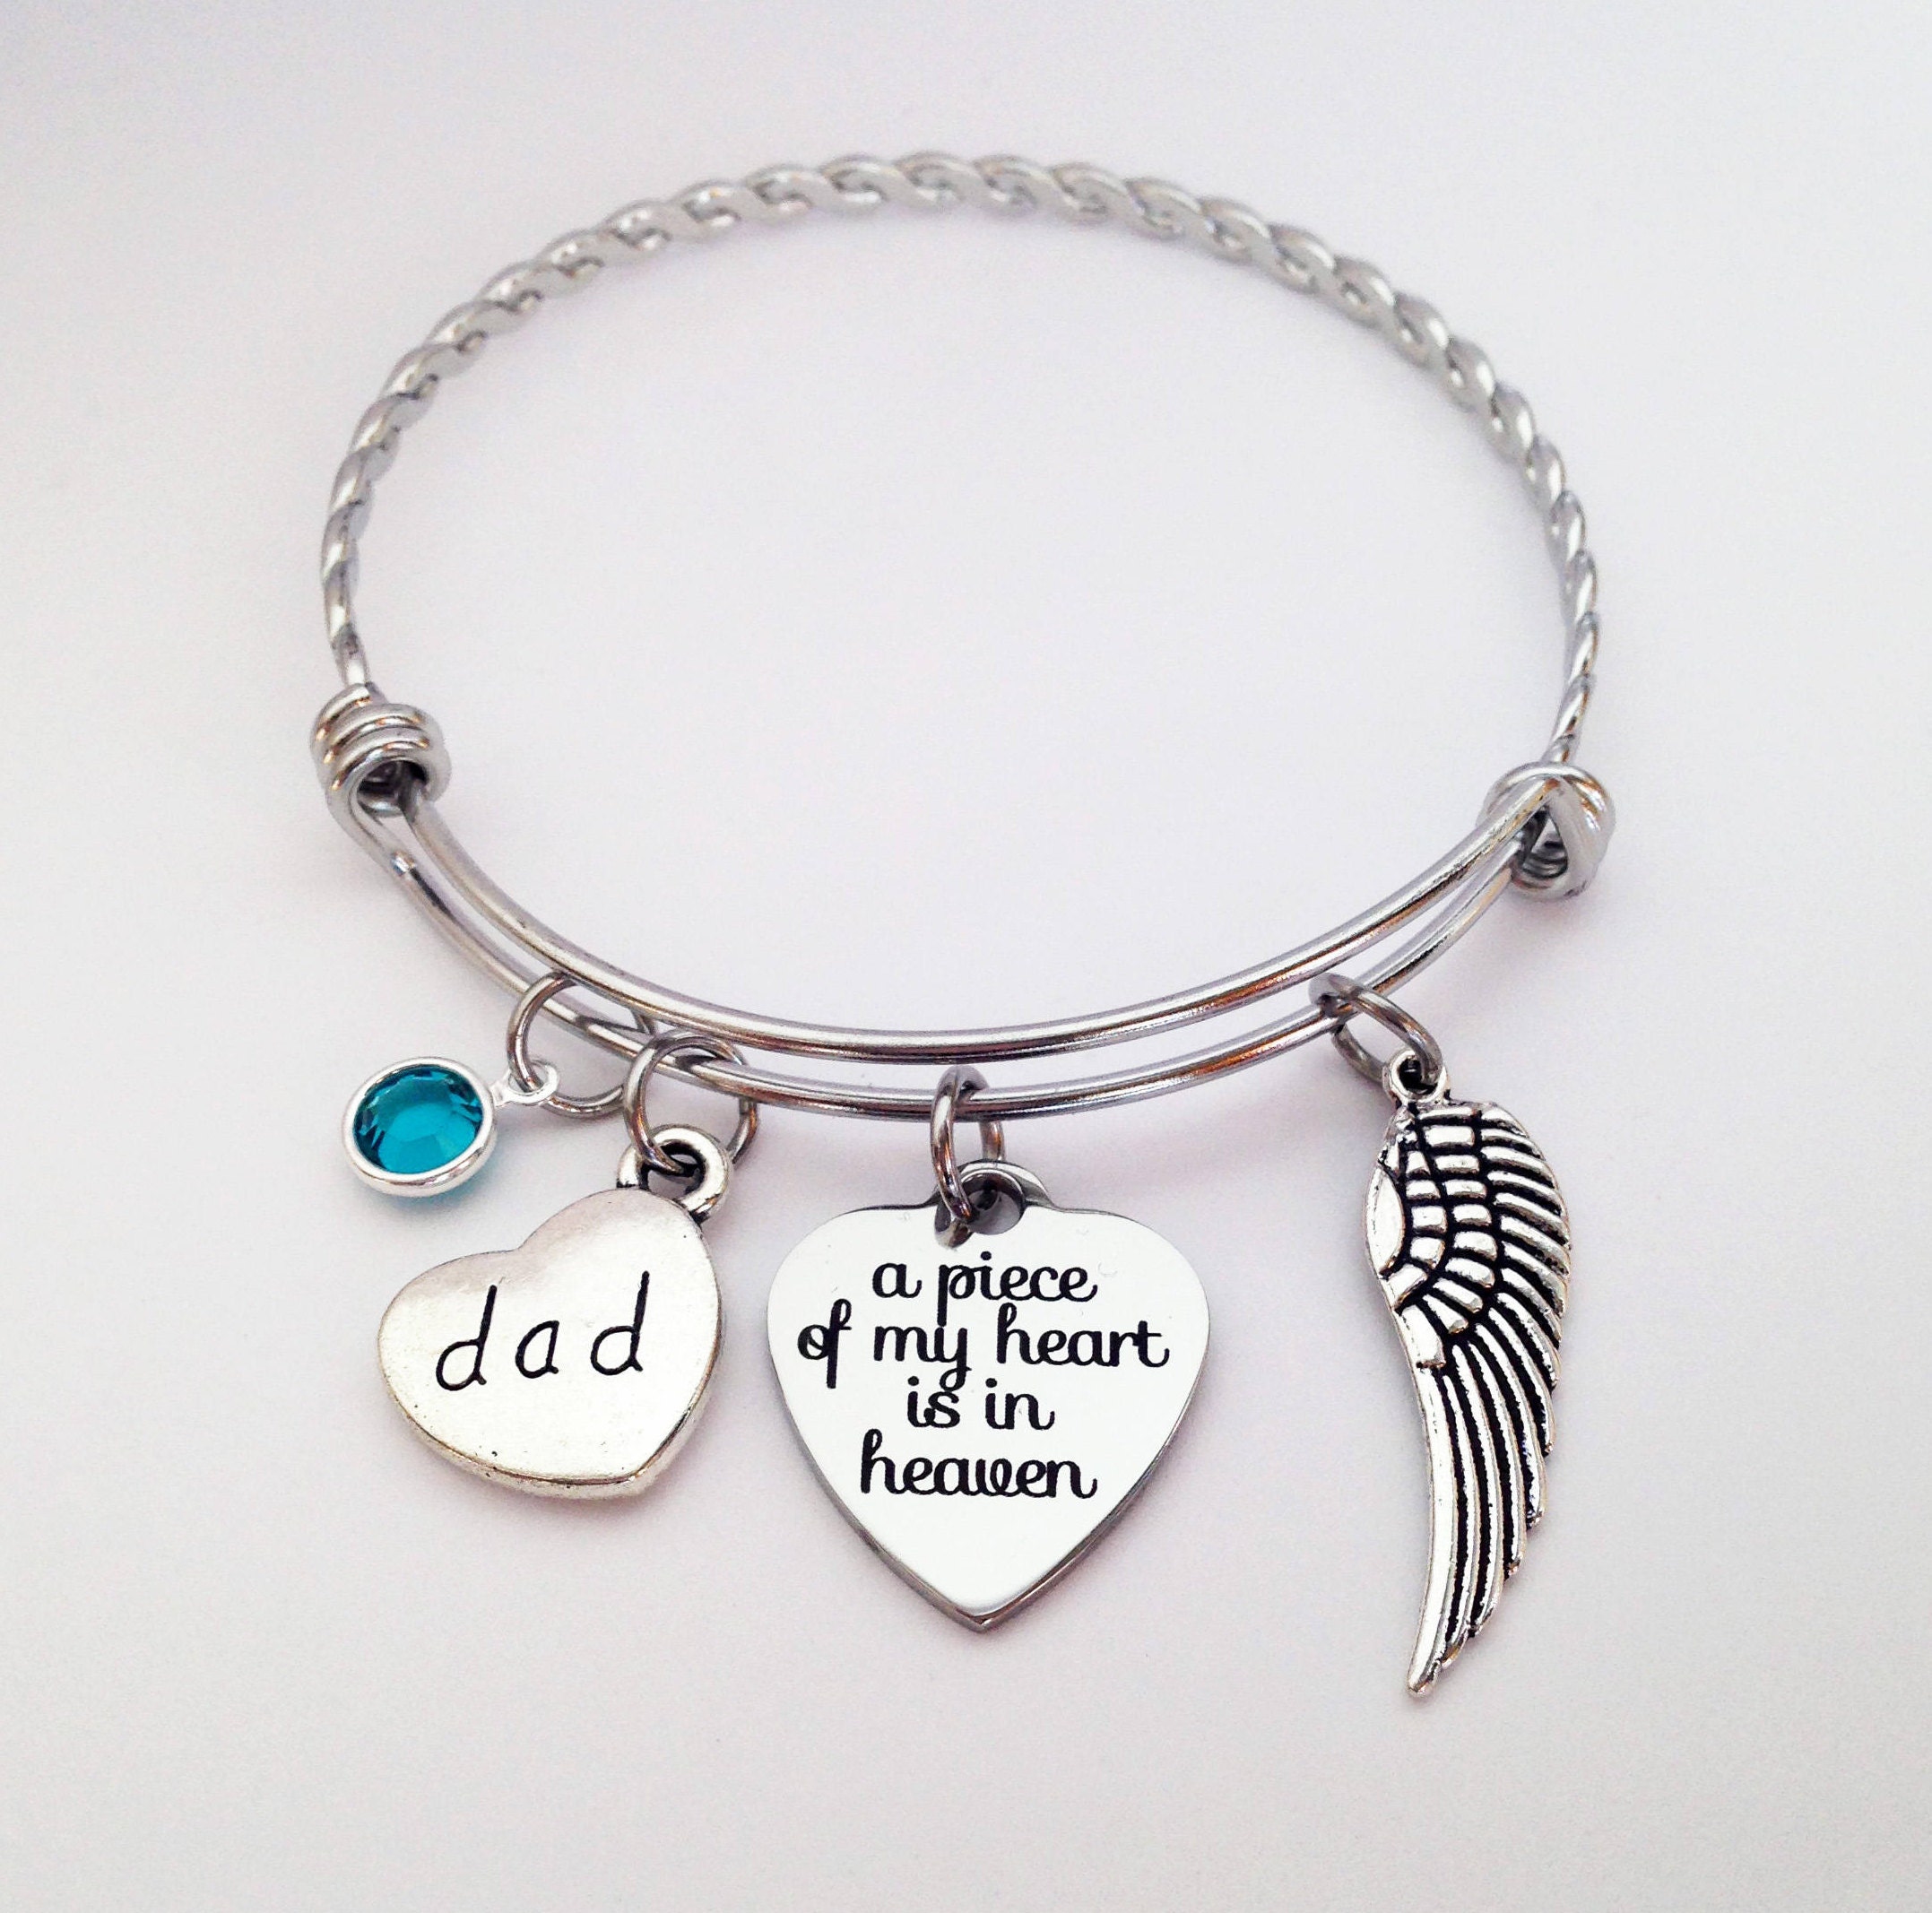 Personalized Memorial Bracelet - Now He Flies with Butterflies